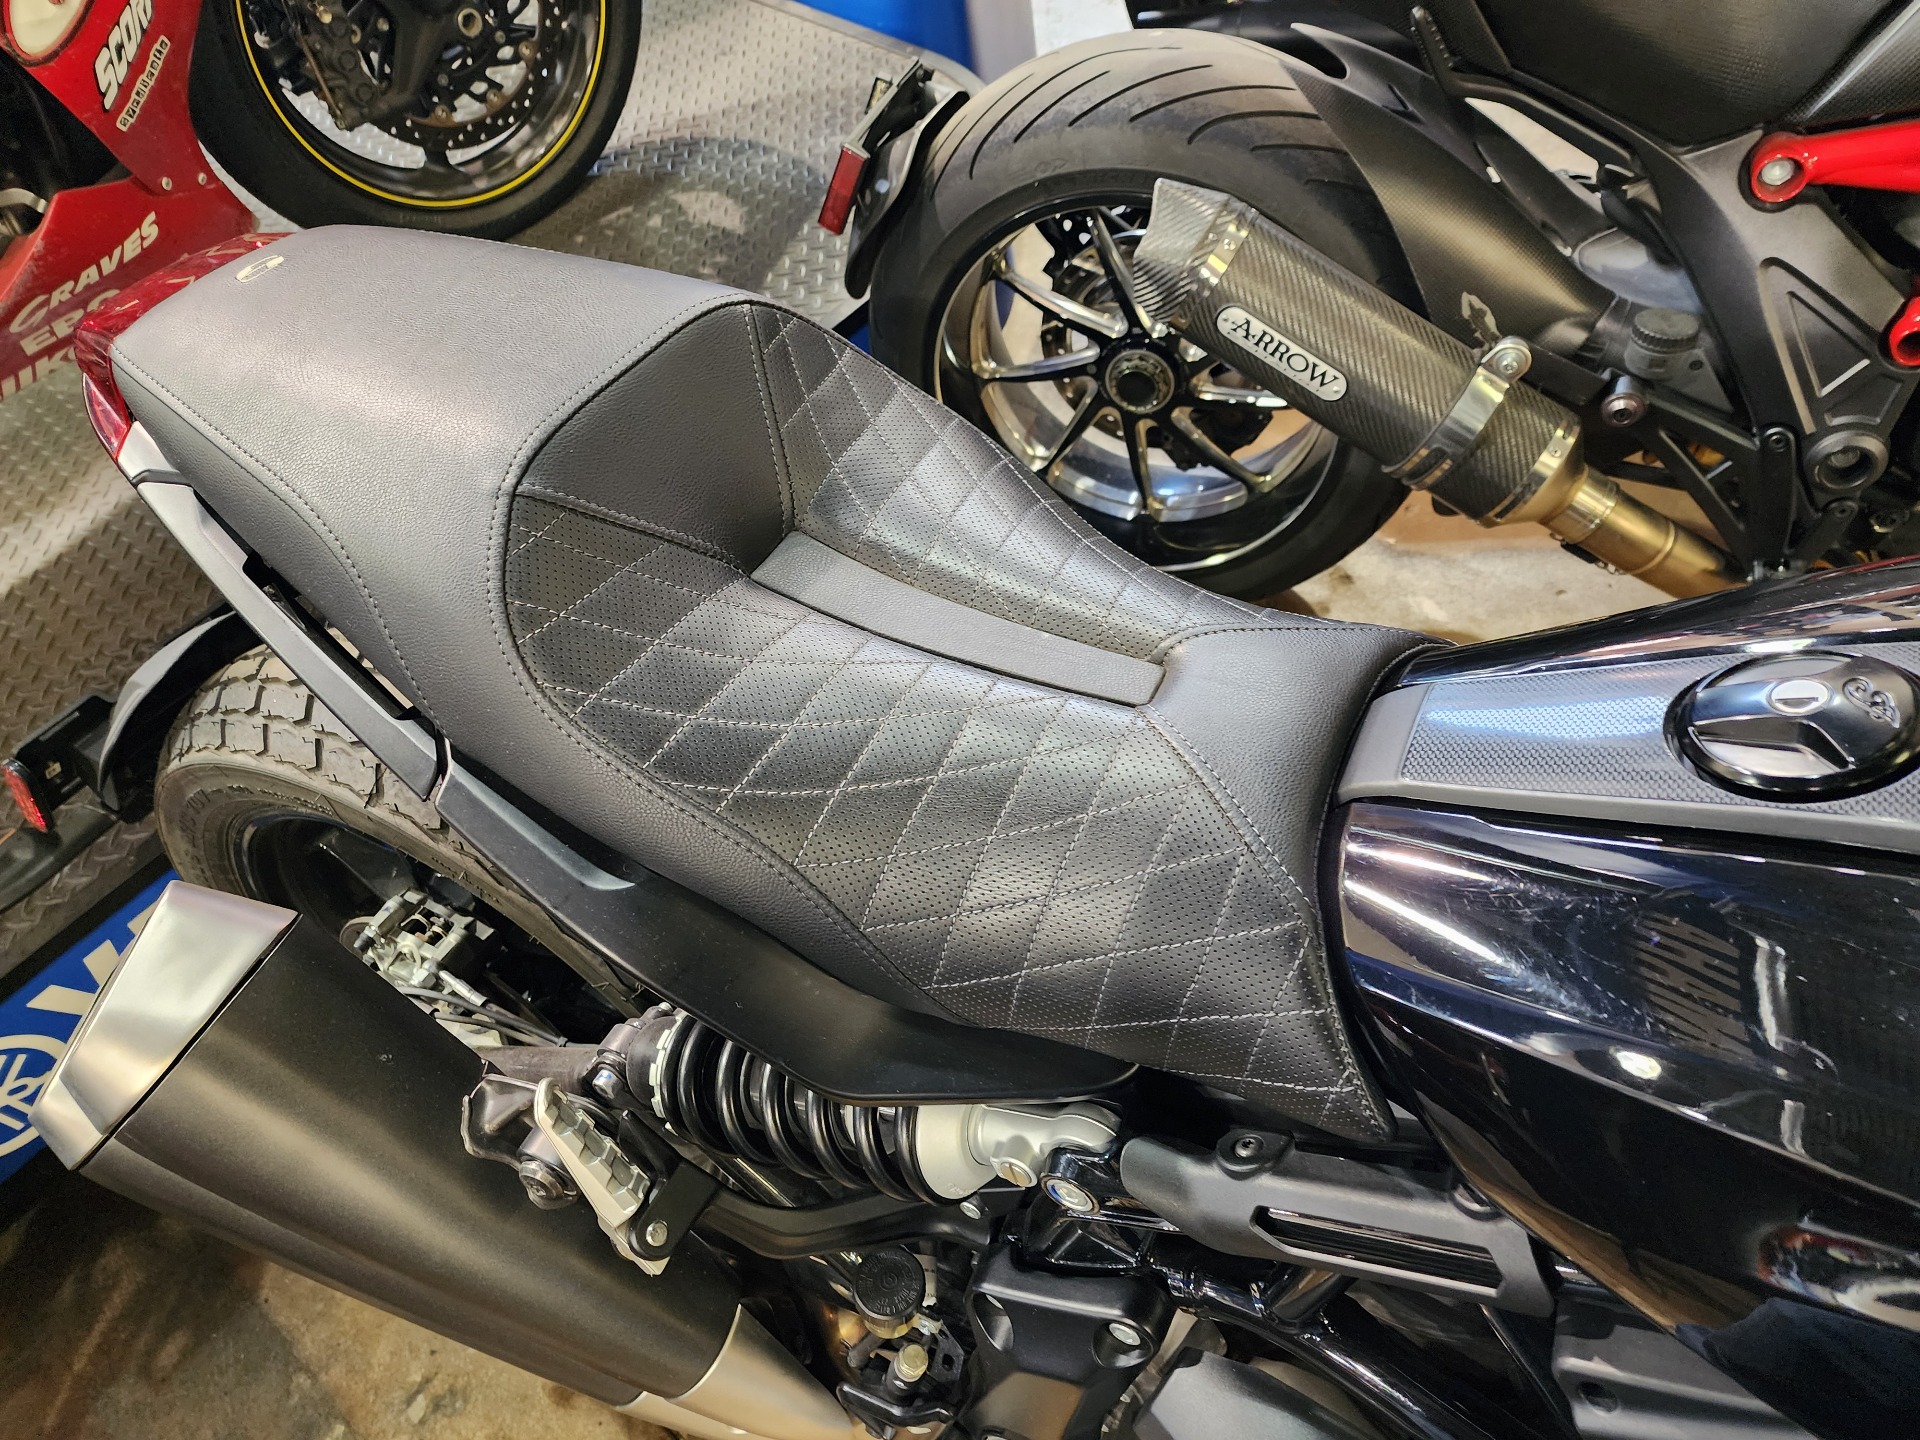 2019 Indian Motorcycle FTR™ 1200 in Denver, Colorado - Photo 3